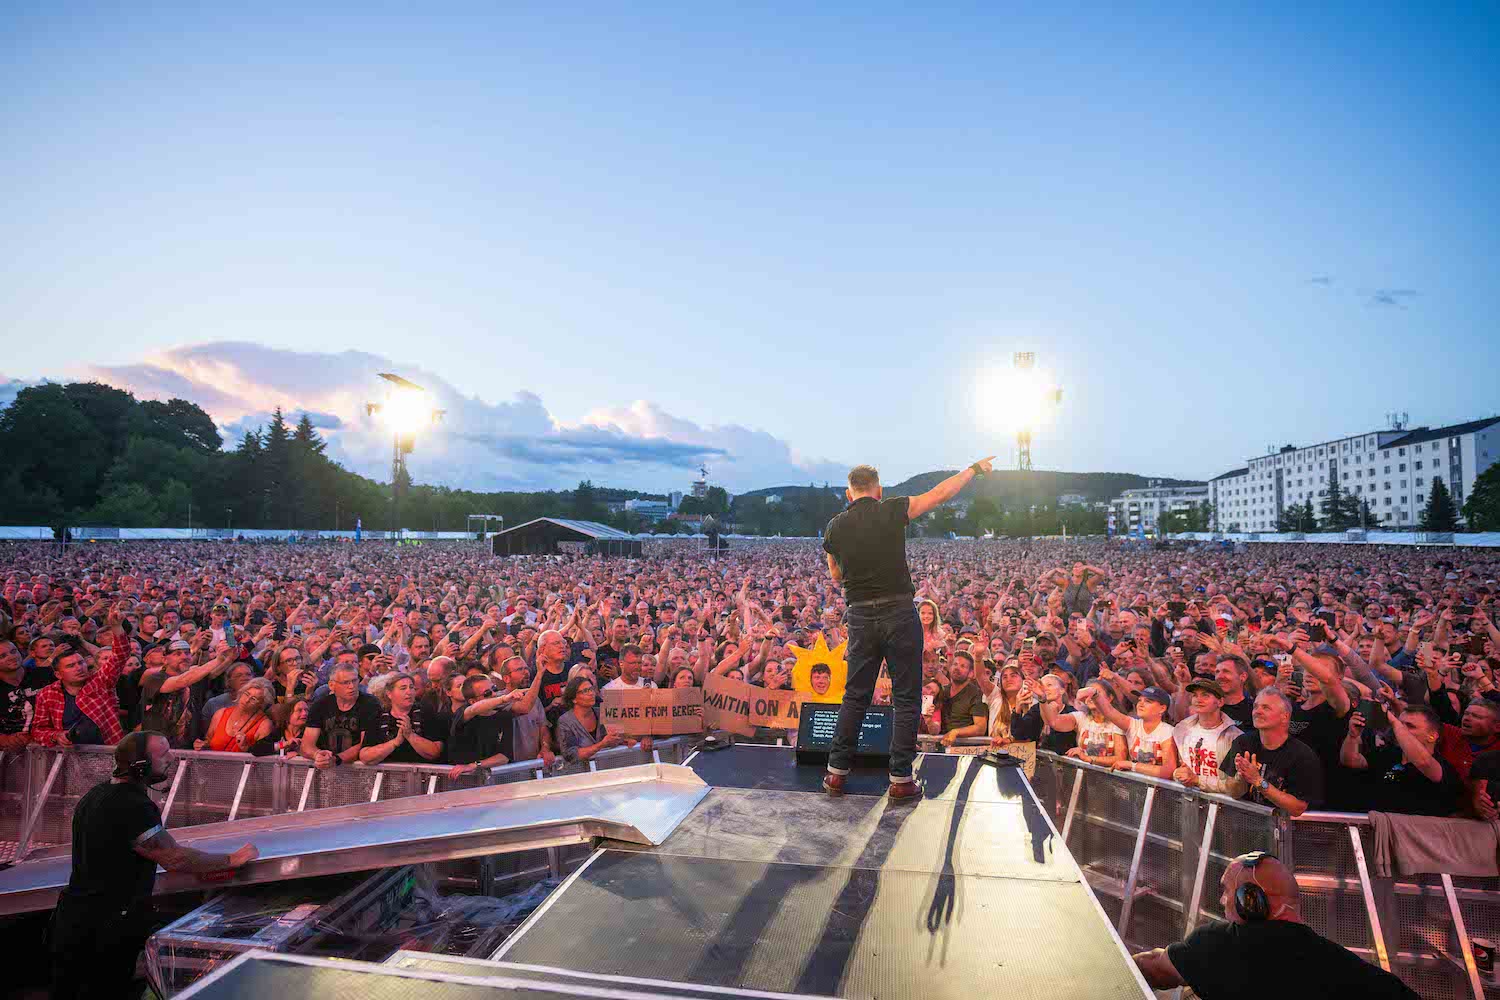 Bruce Springsteen & E Street Band at Voldsløkka, Oslo, Norway on June 30, 2023.